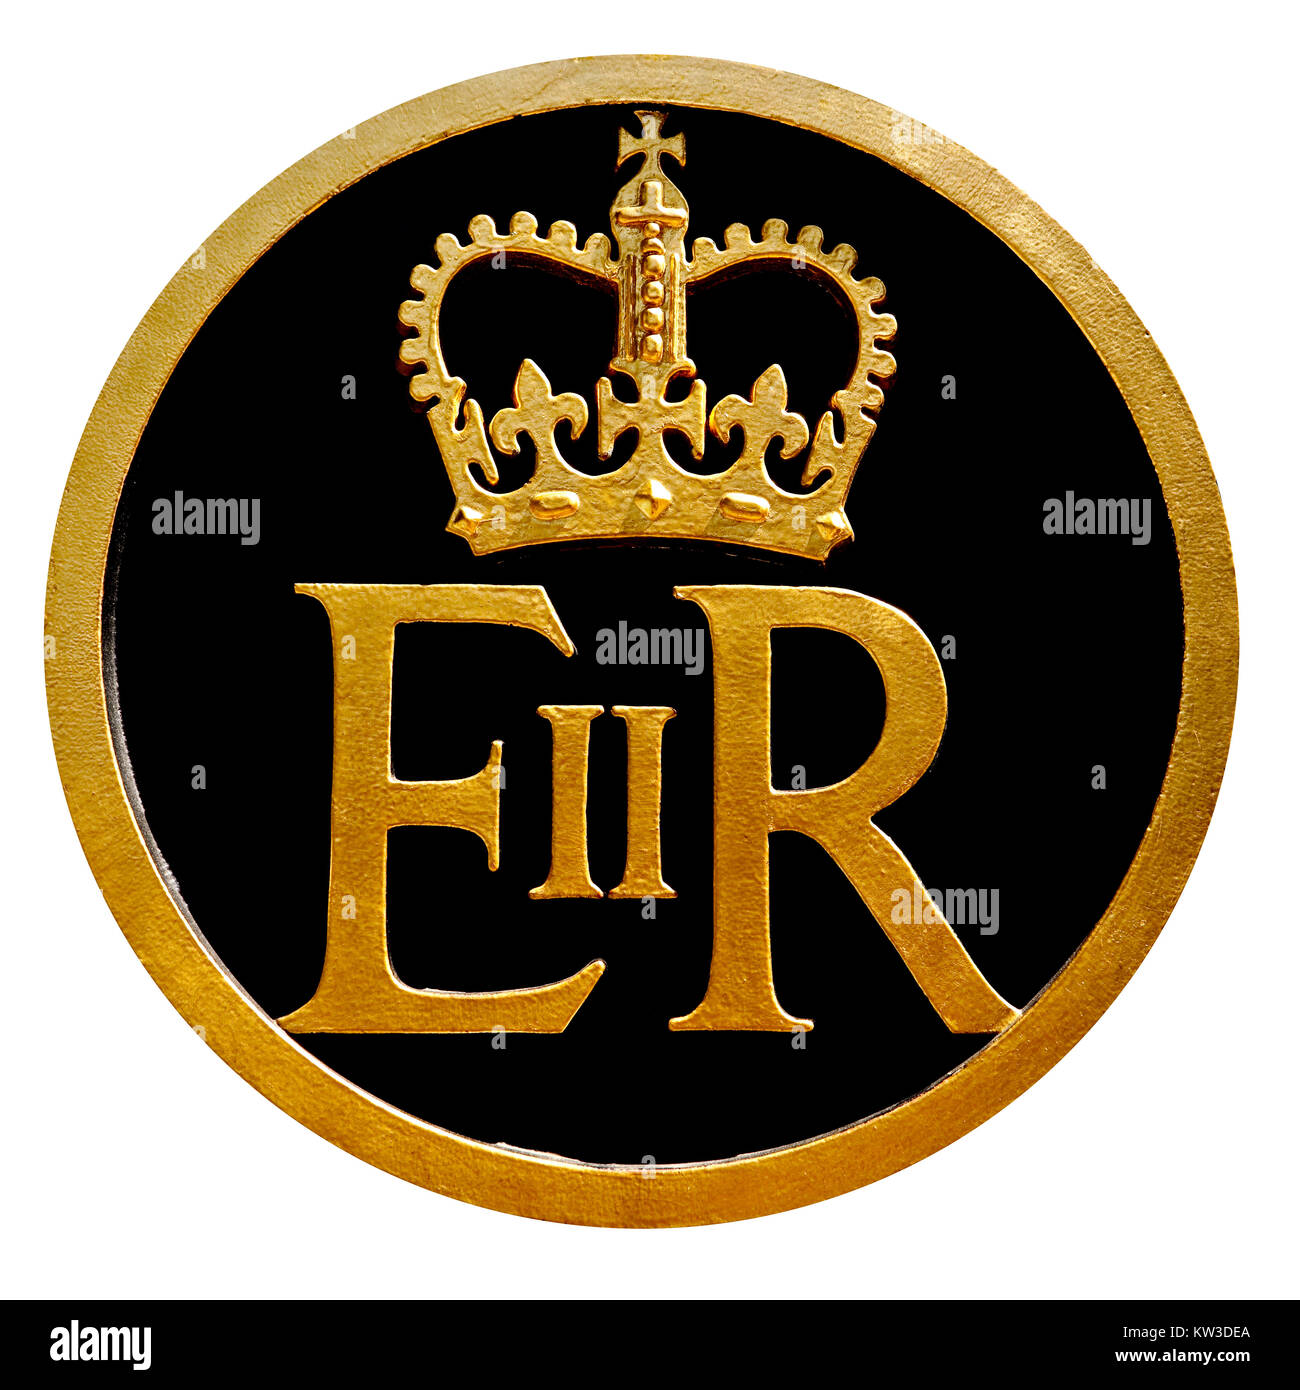 E II R Acronym Elizabeth II Regina (Queen of Great Britain) Stock Photo